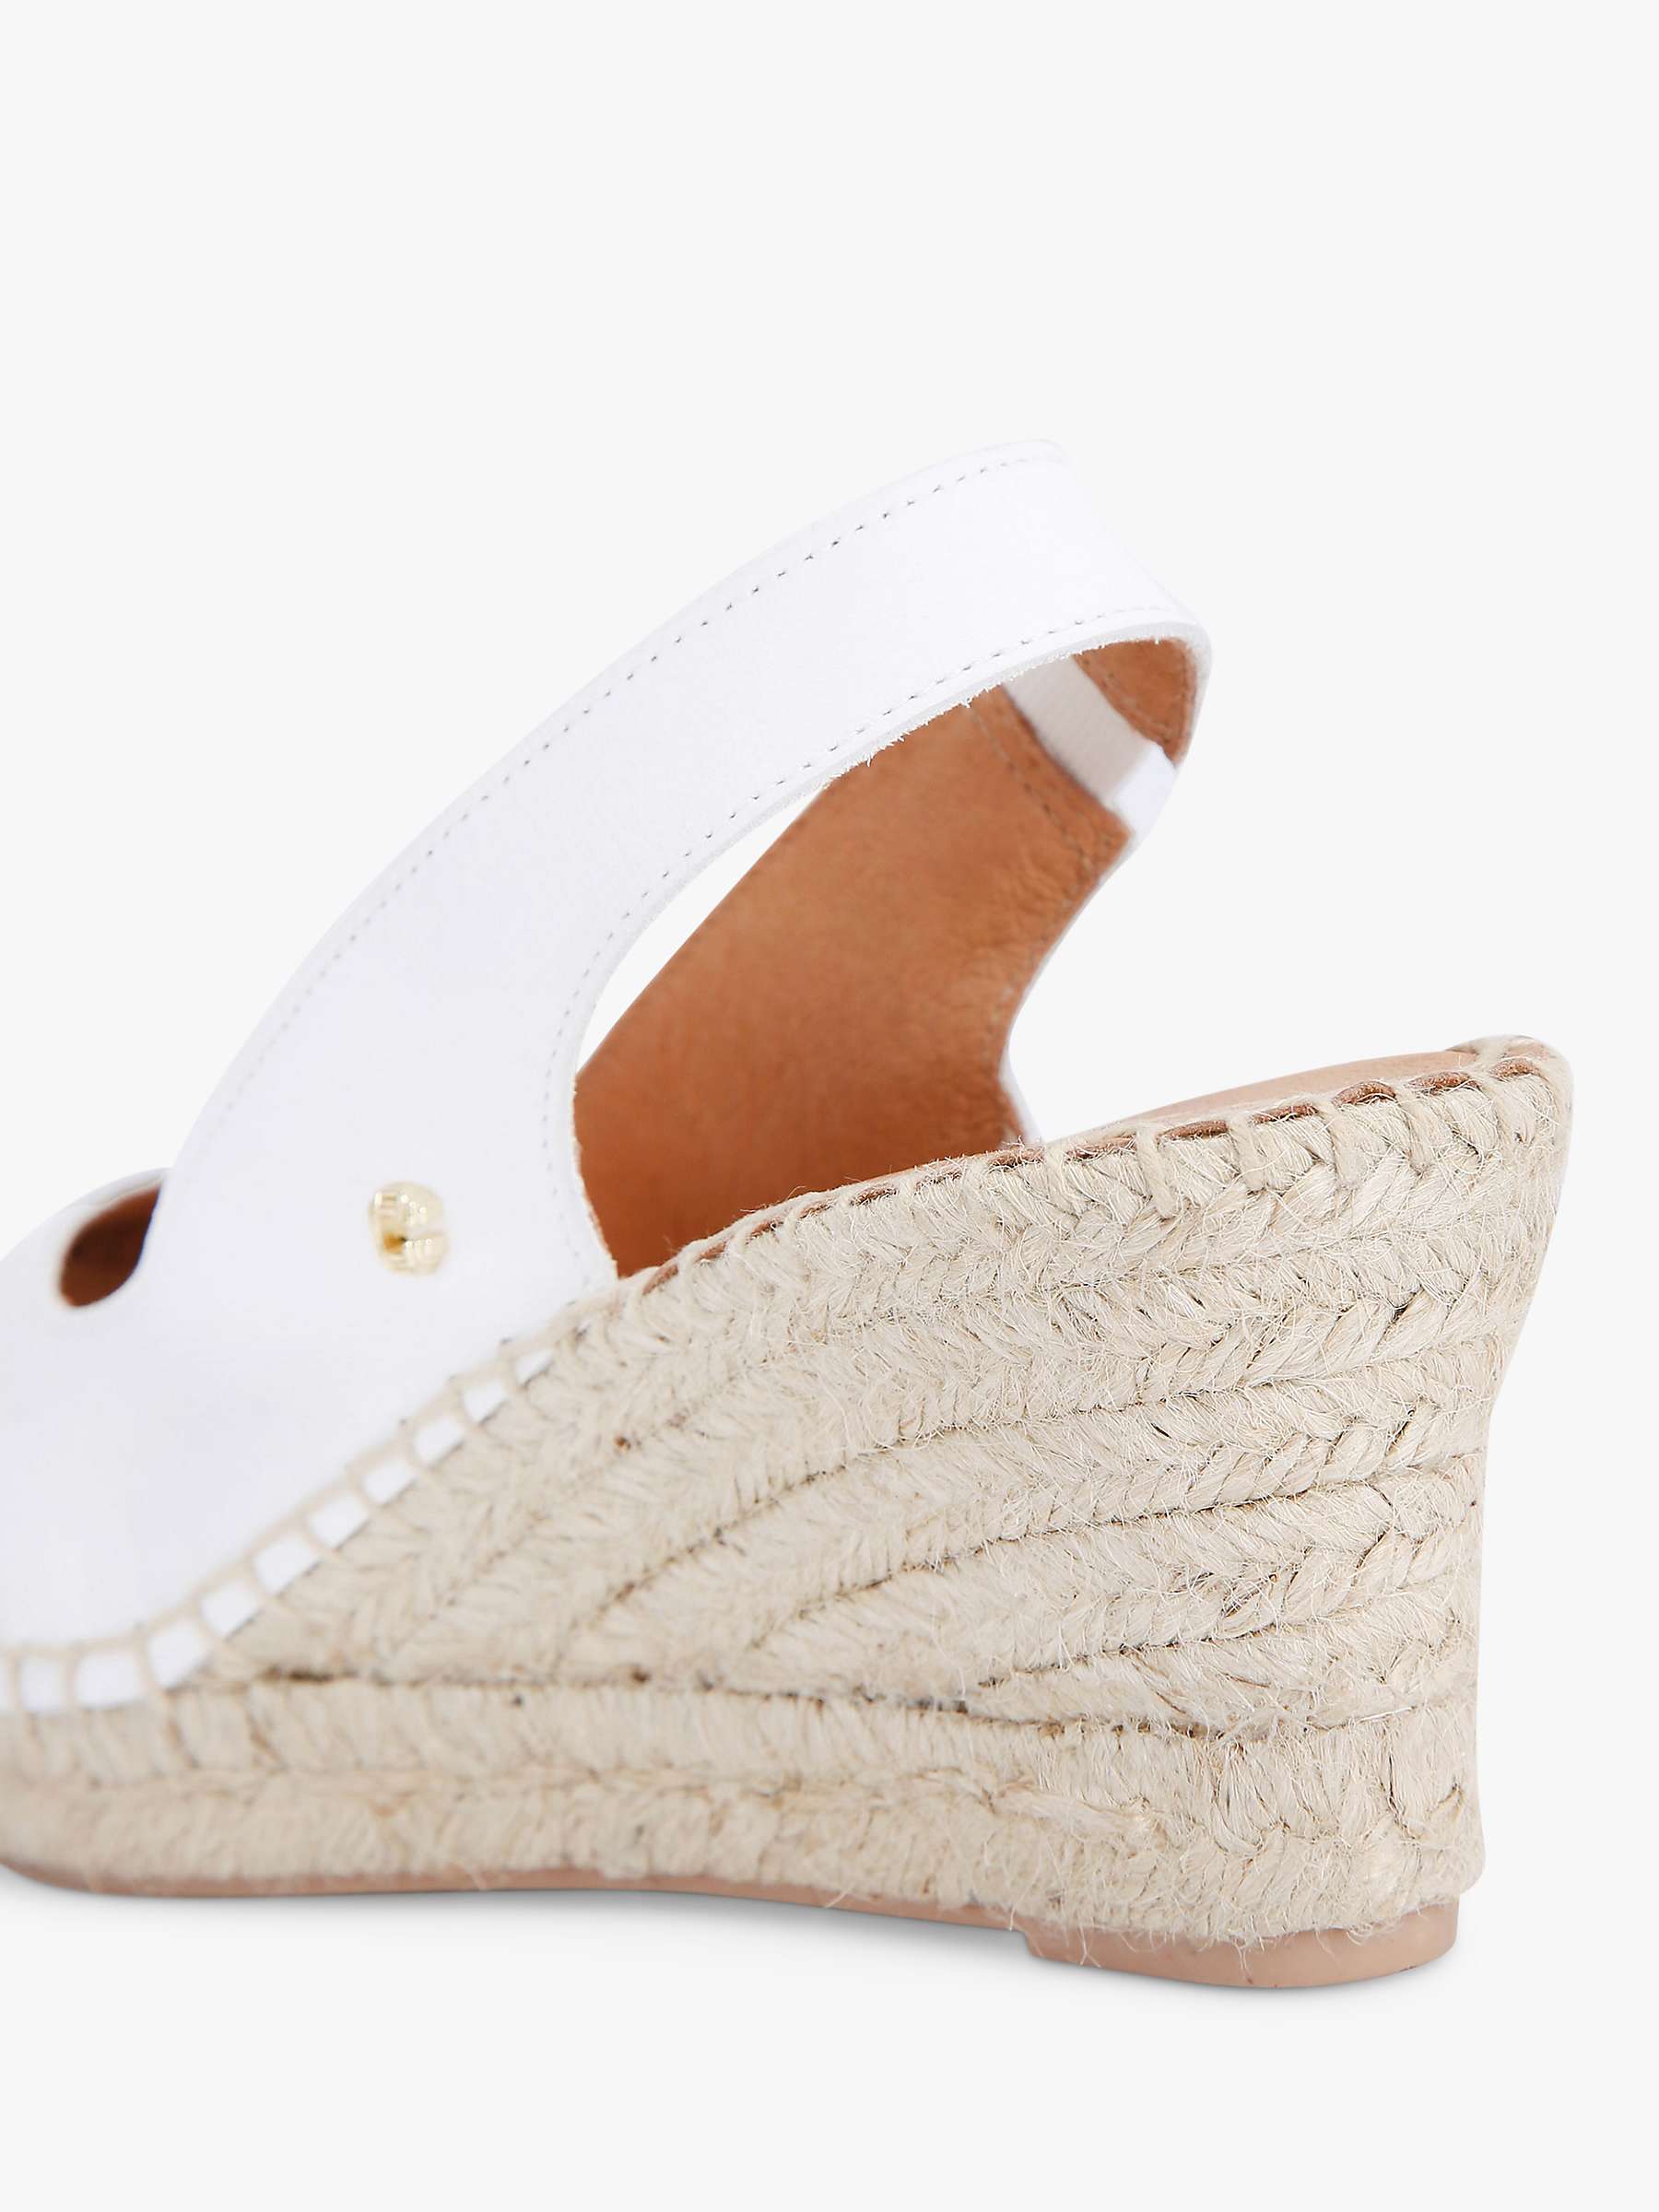 Carvela Sharon Espadrille Wedge Sandals, White at John Lewis & Partners